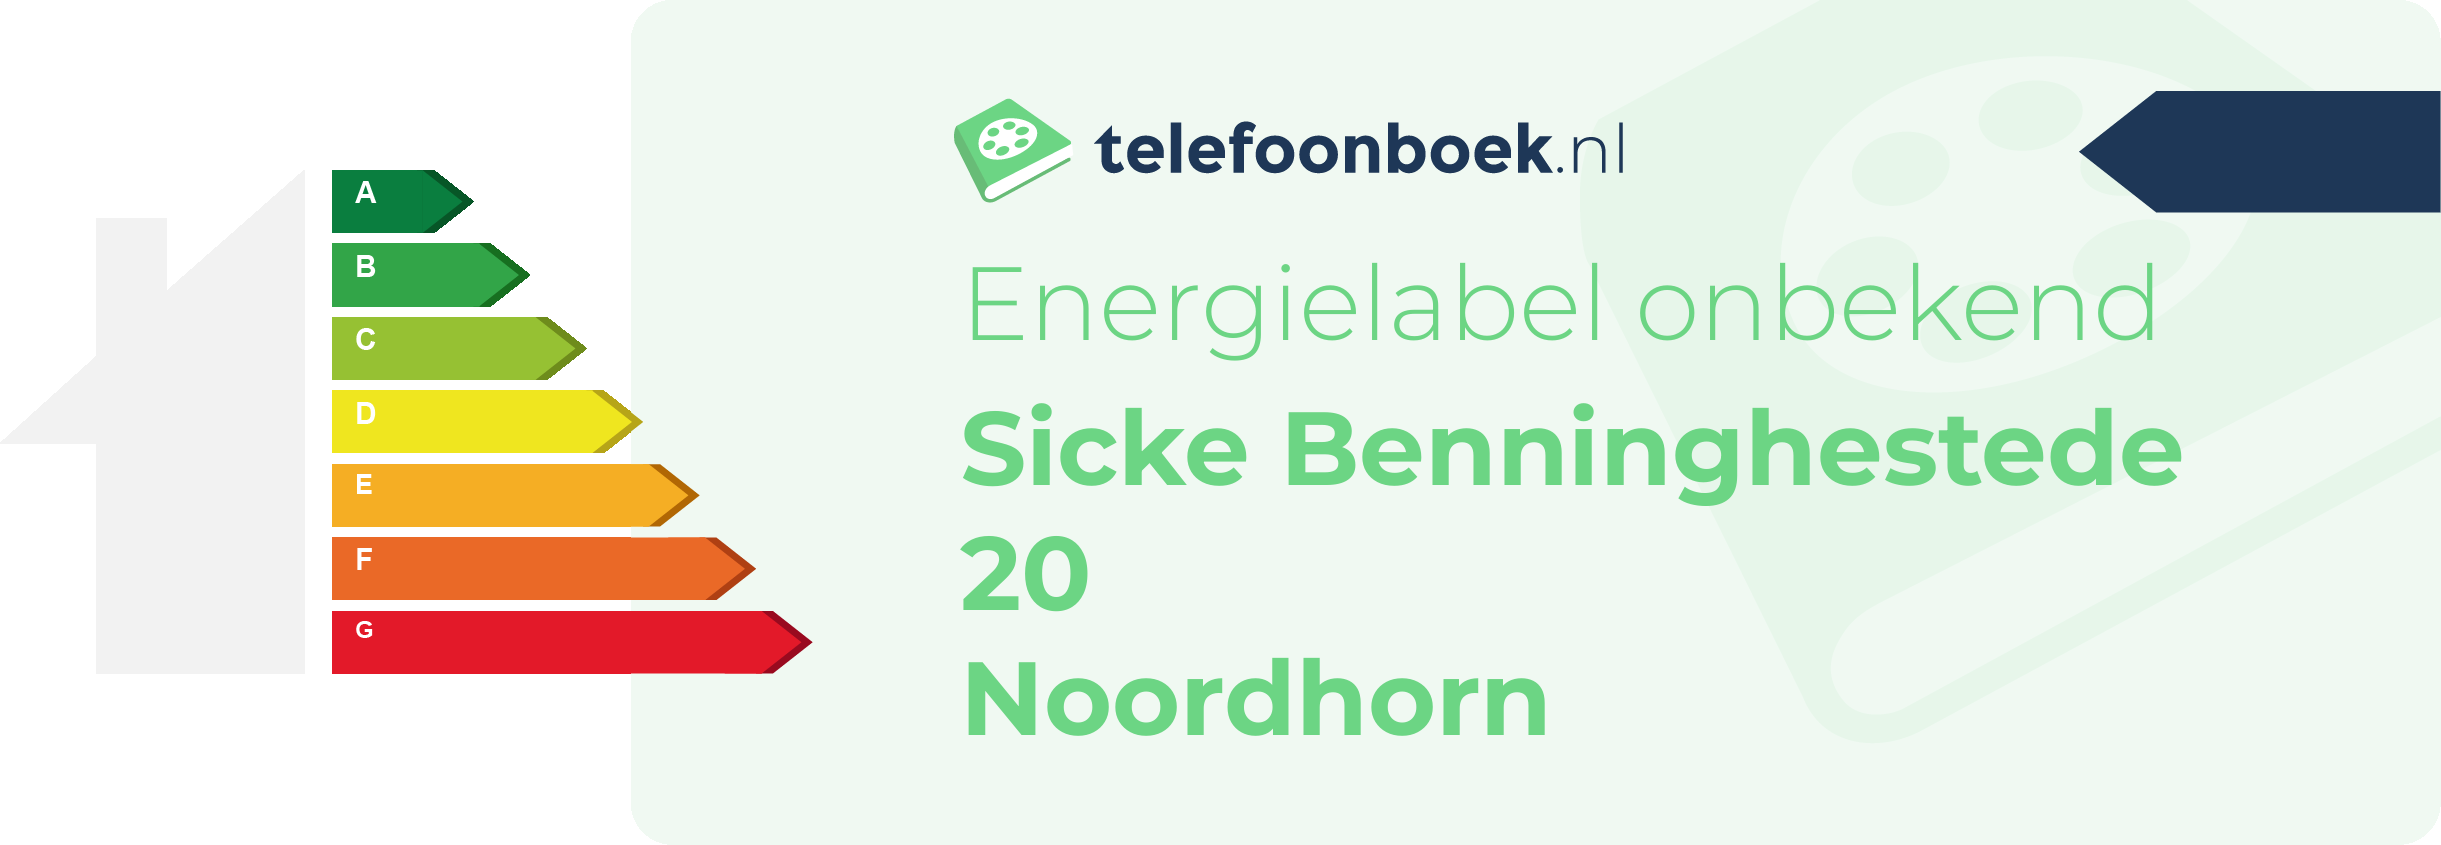 Energielabel Sicke Benninghestede 20 Noordhorn